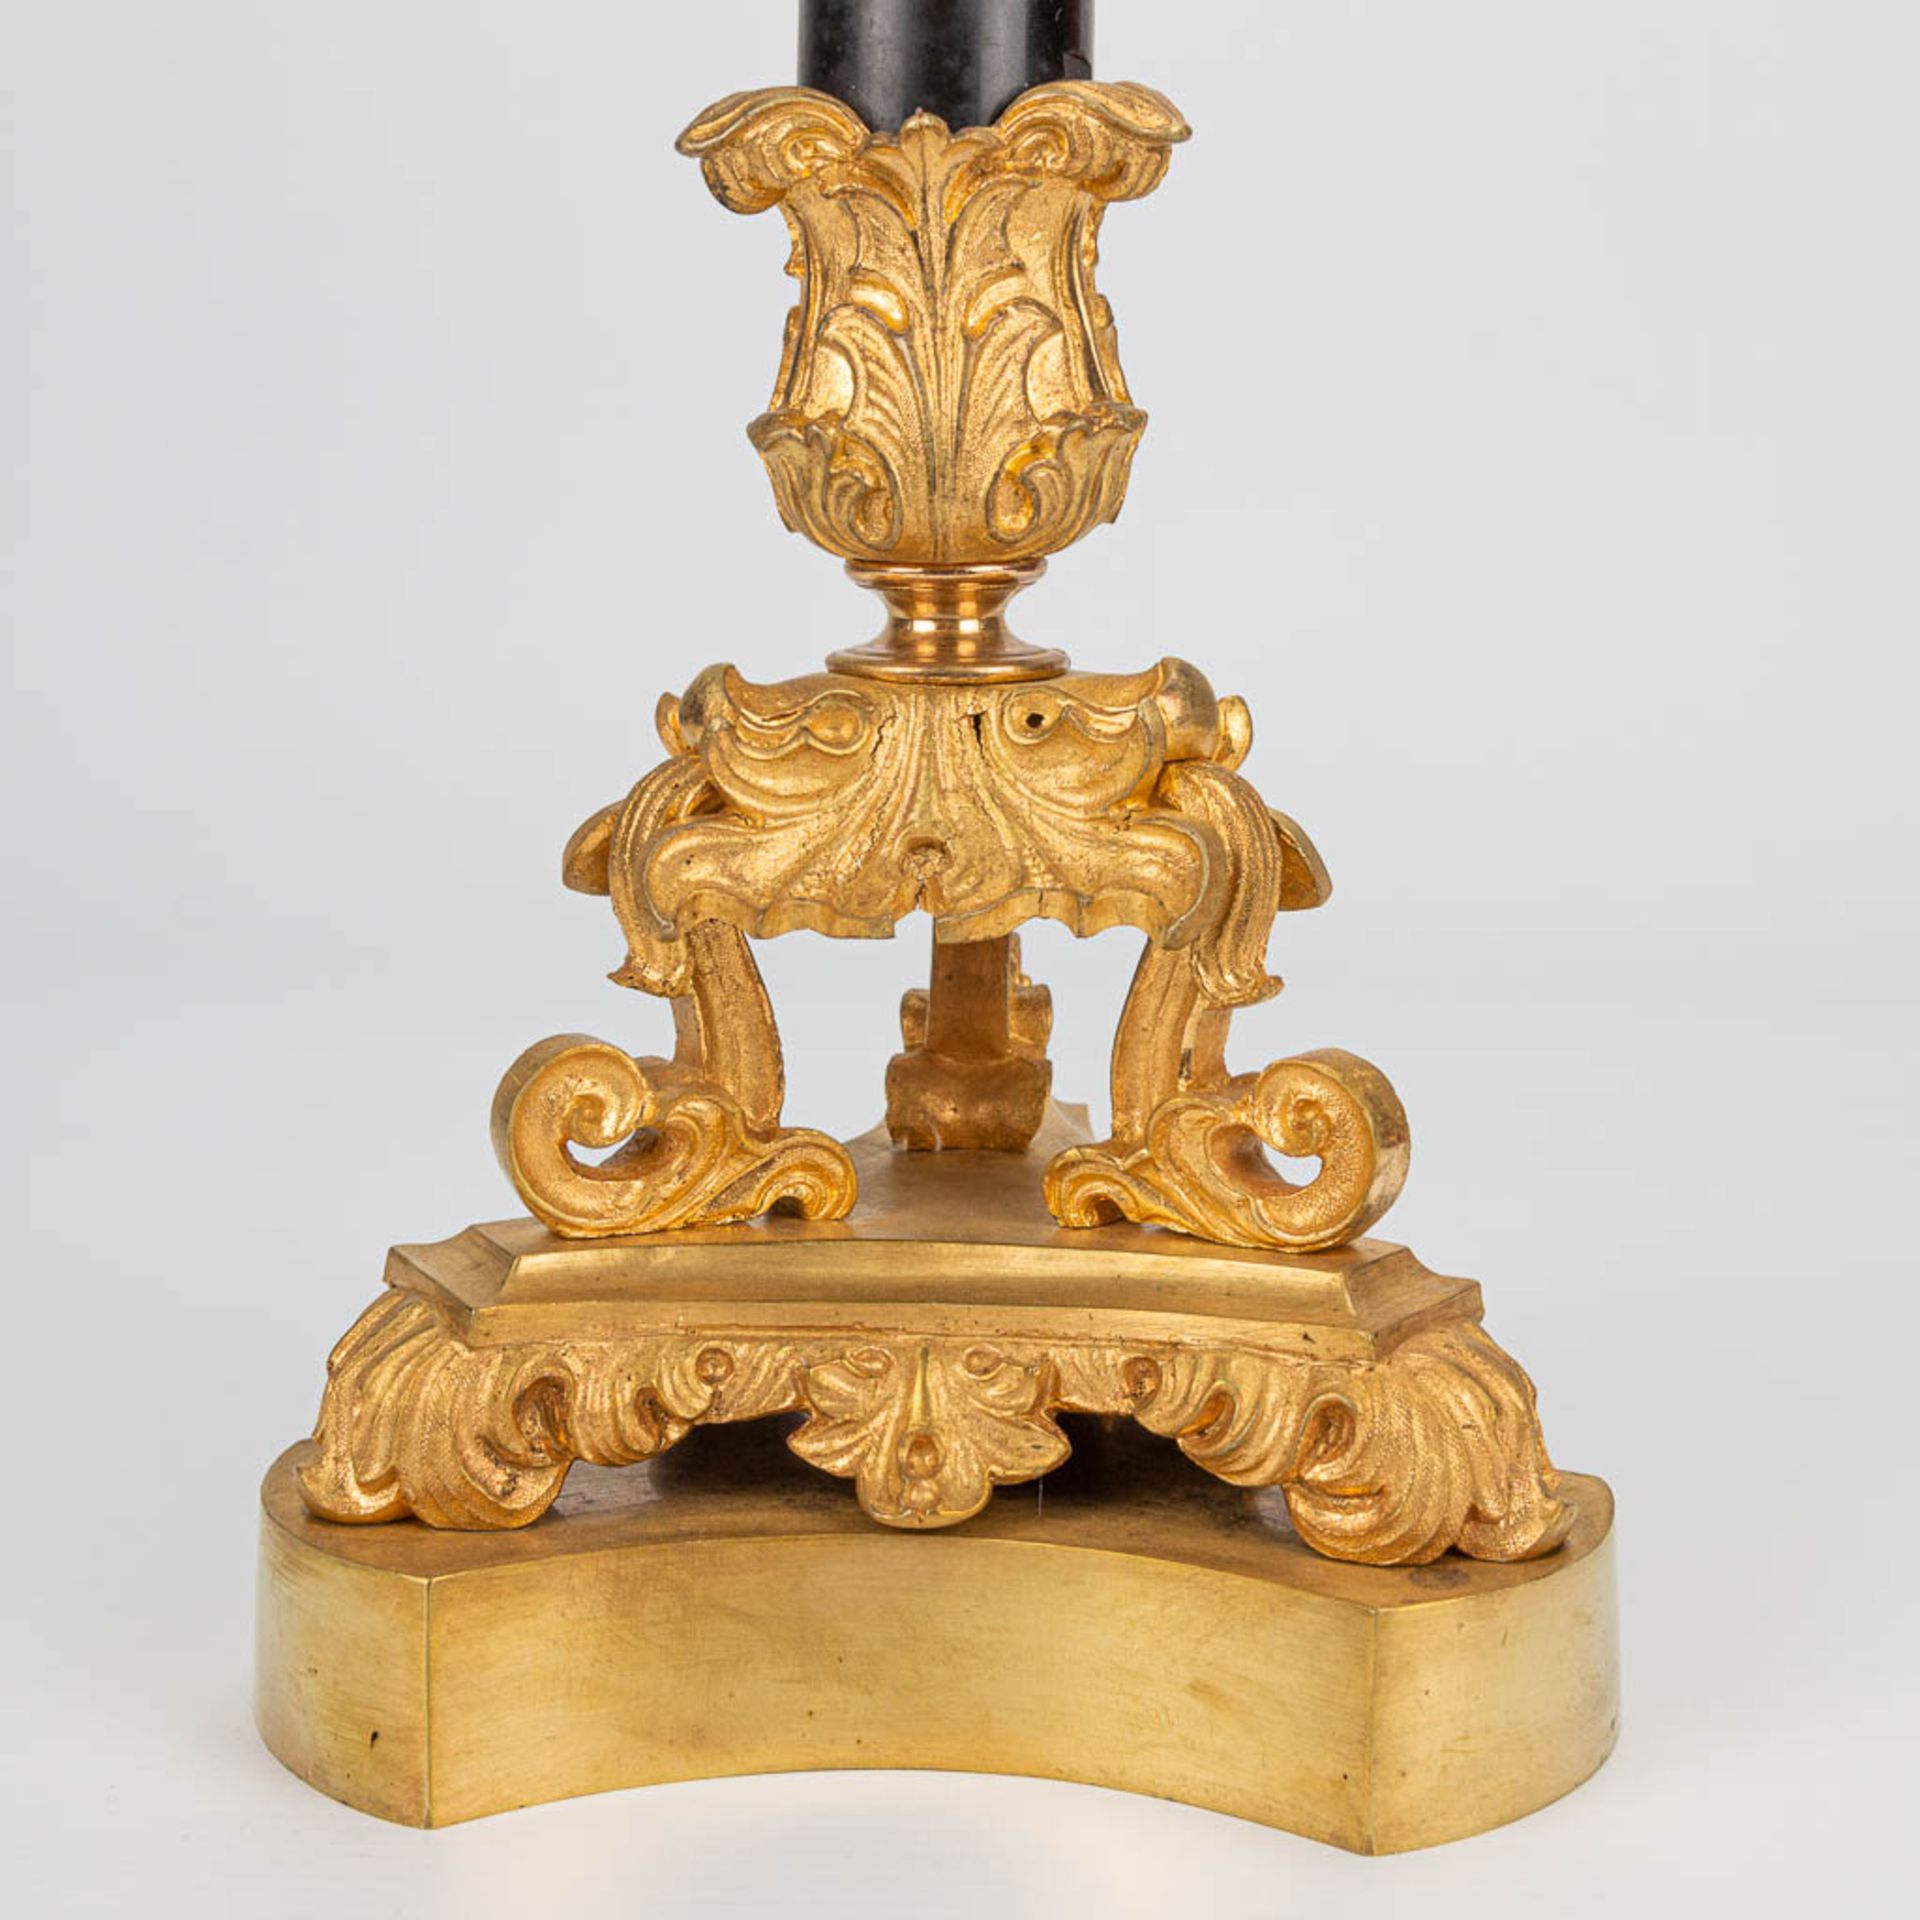 A pair of candelabra made of gilt bronze. 19th century. (21 x 19 x 60 cm) - Image 5 of 5